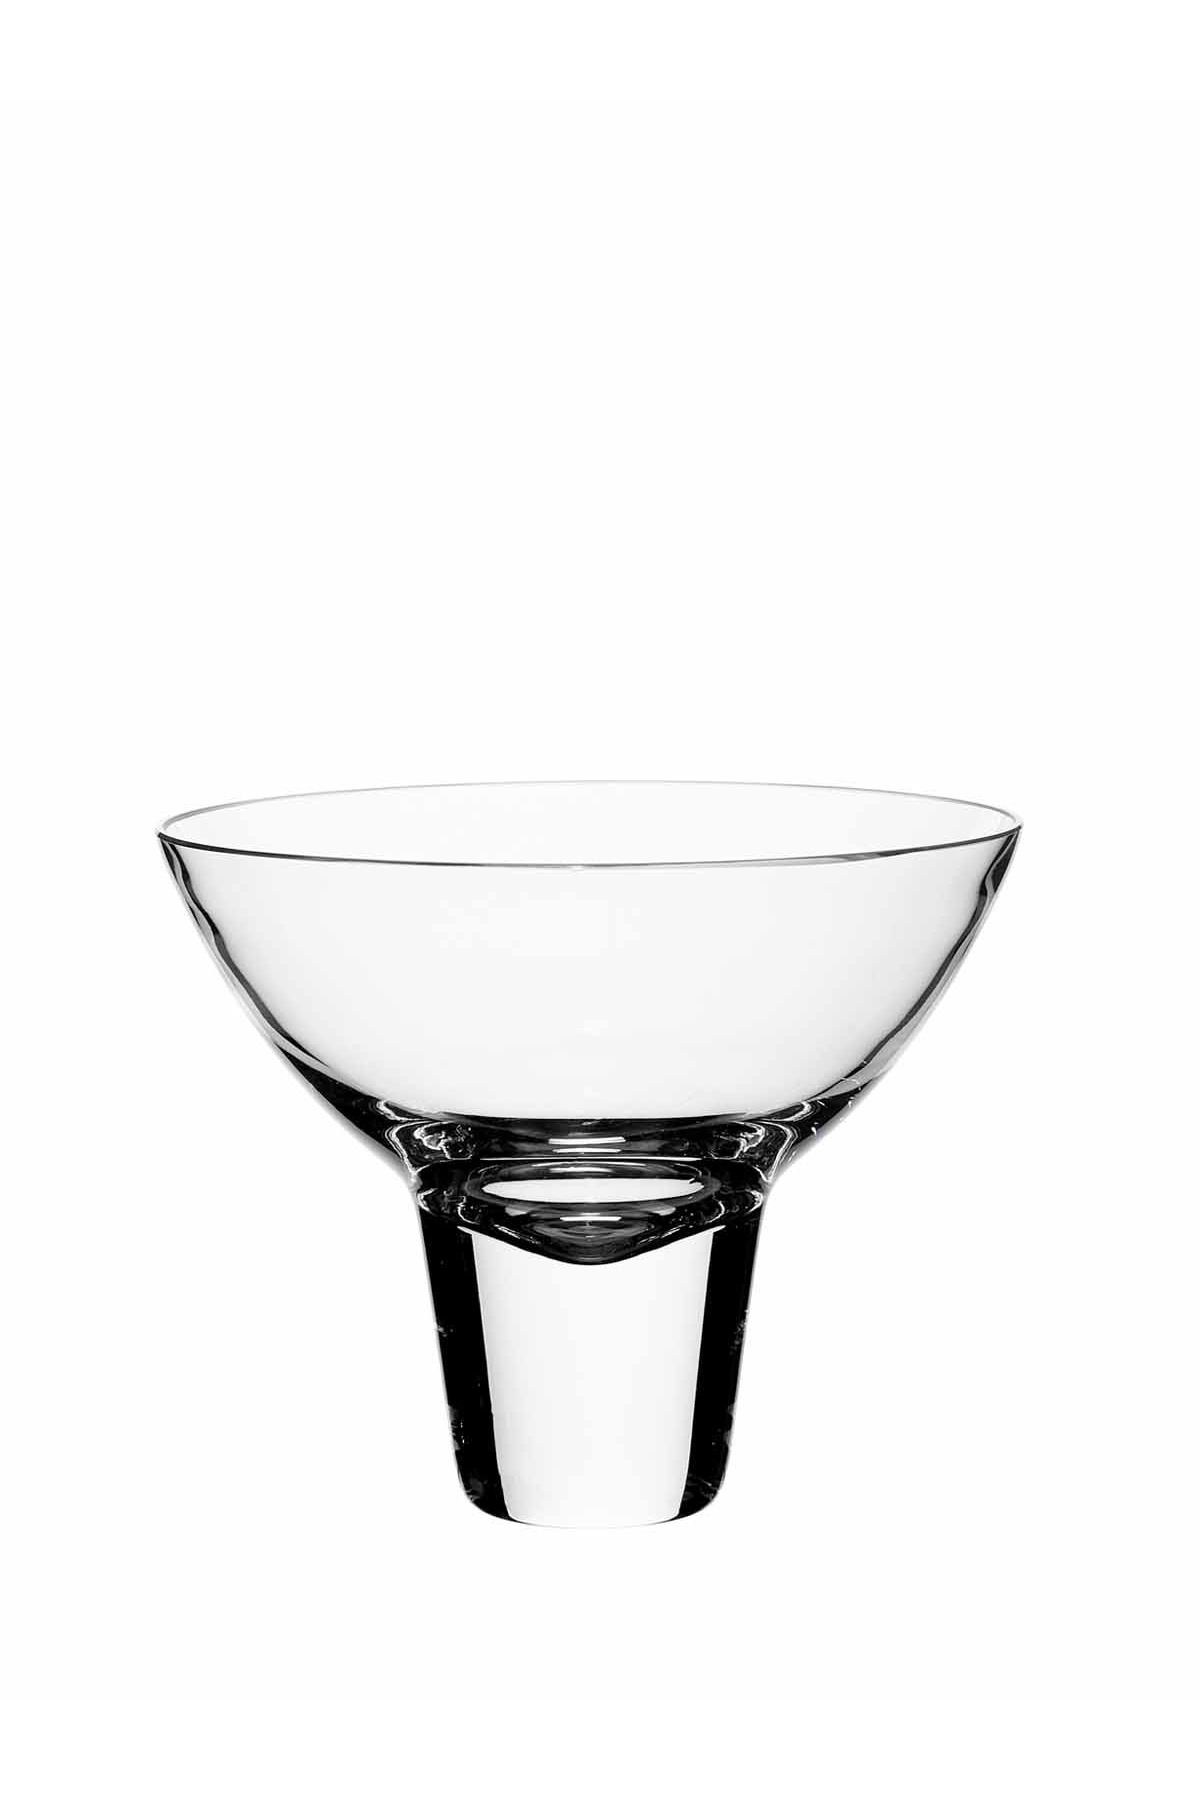 Paşabahçe "Social" Martini Bardağı 1 ADET